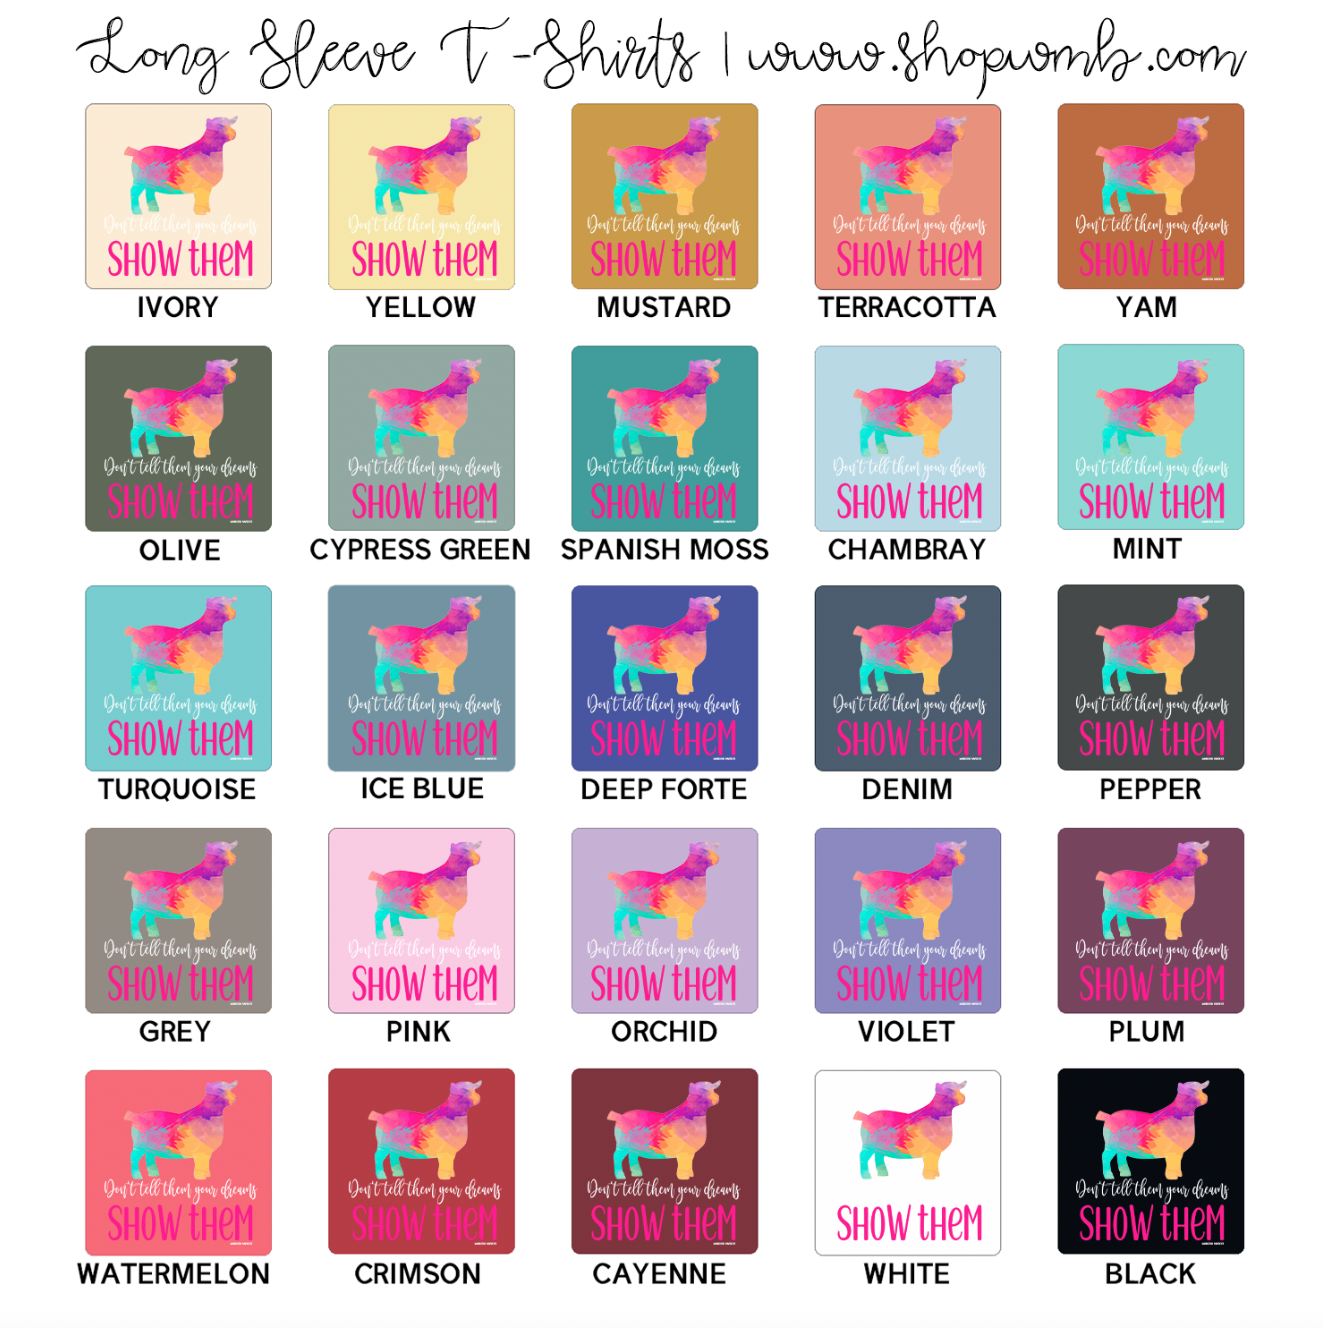 Show Them Pygmy Goat LONG SLEEVE T-Shirt (S-3XL) - Multiple Colors!